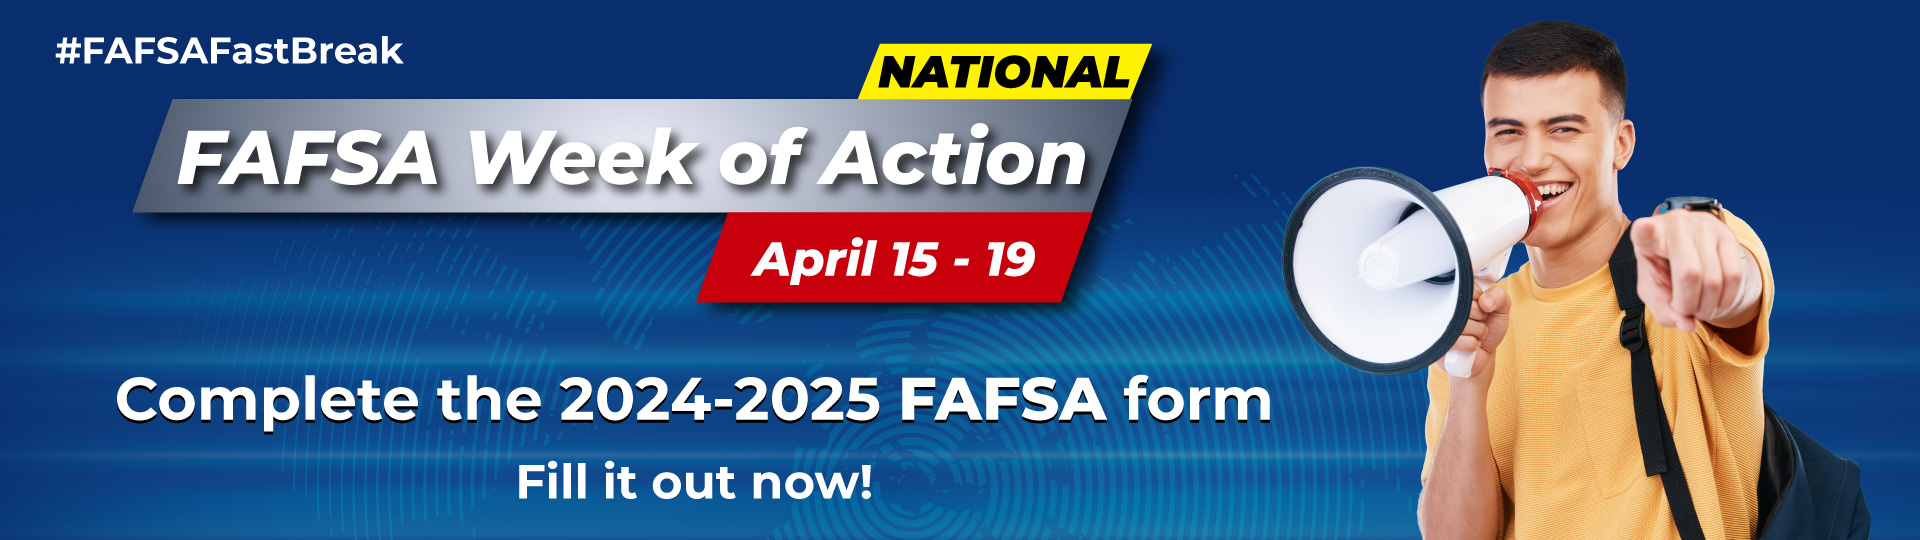 National FAFSA Week of Action April 15-19 